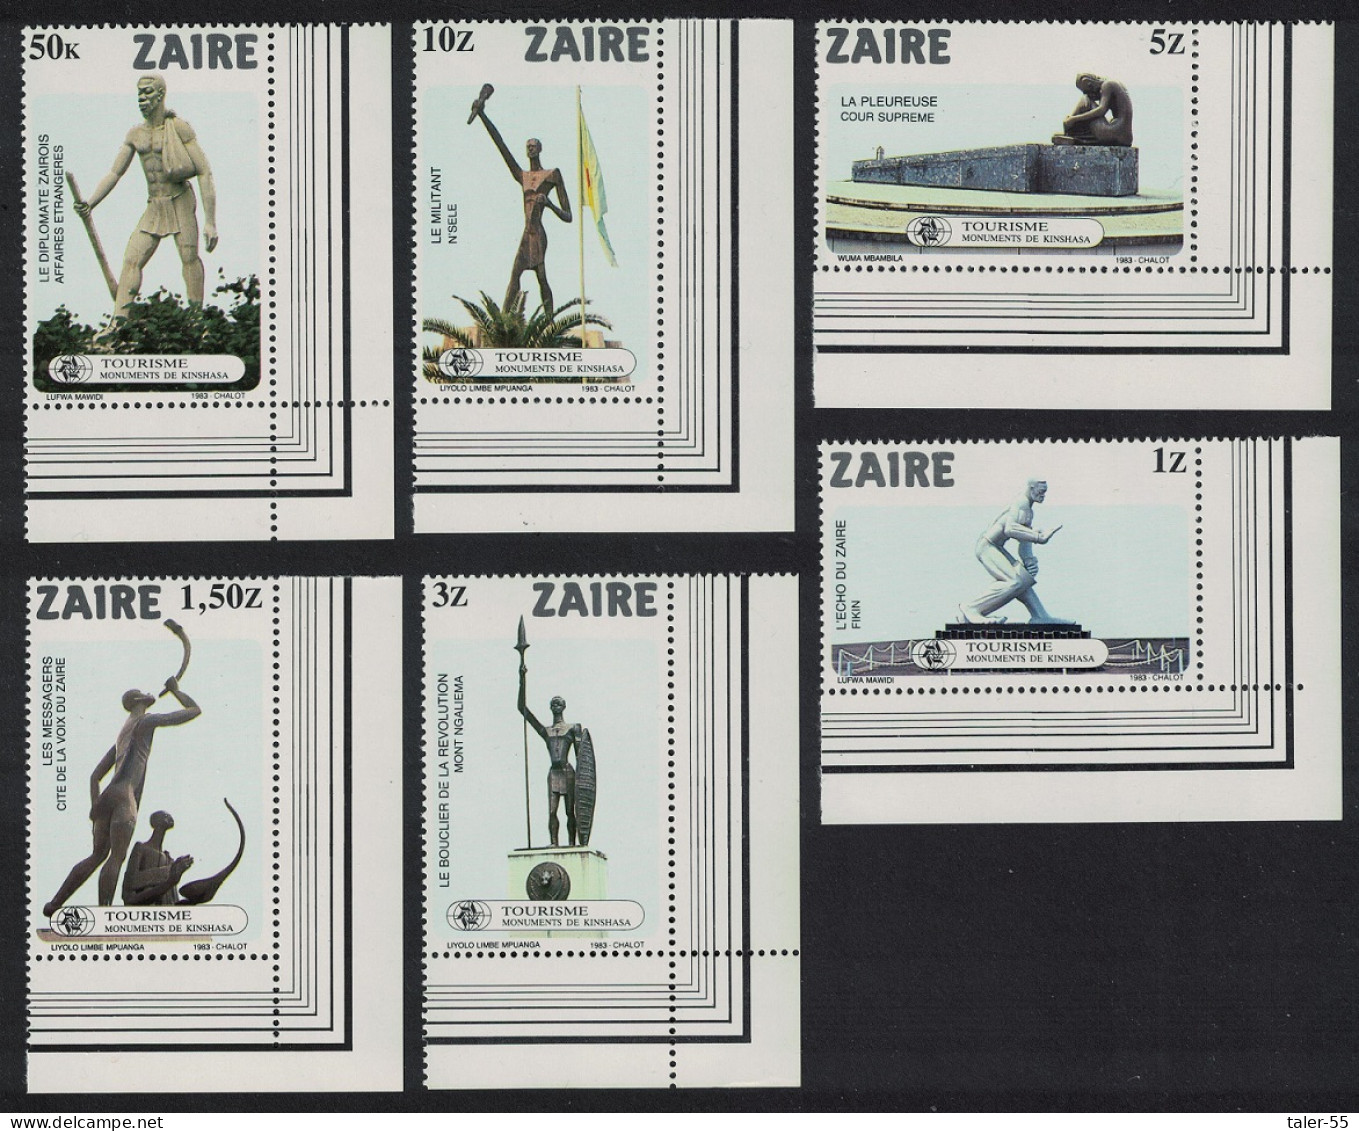 Zaire Kinshasa Monuments 6v Corners 1983 MNH SG#1157-1162 Sc#1115-1120 - Ongebruikt